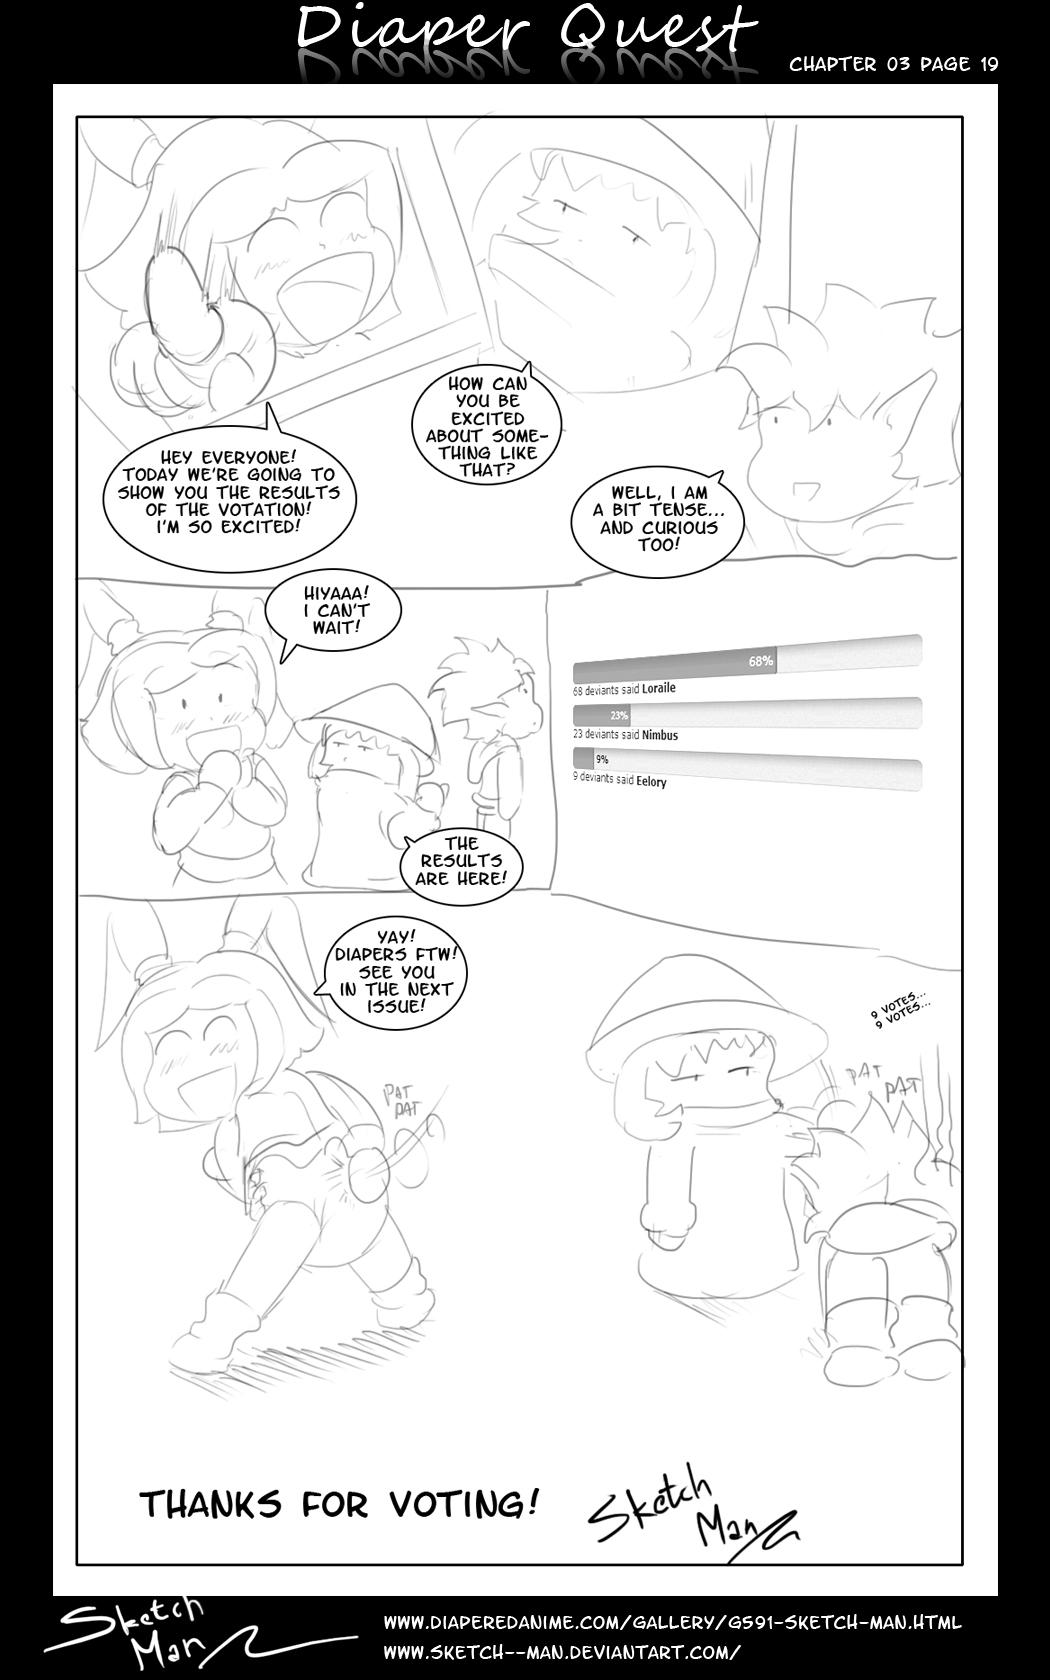 Sketch Man's Diaper Quest Complete 57